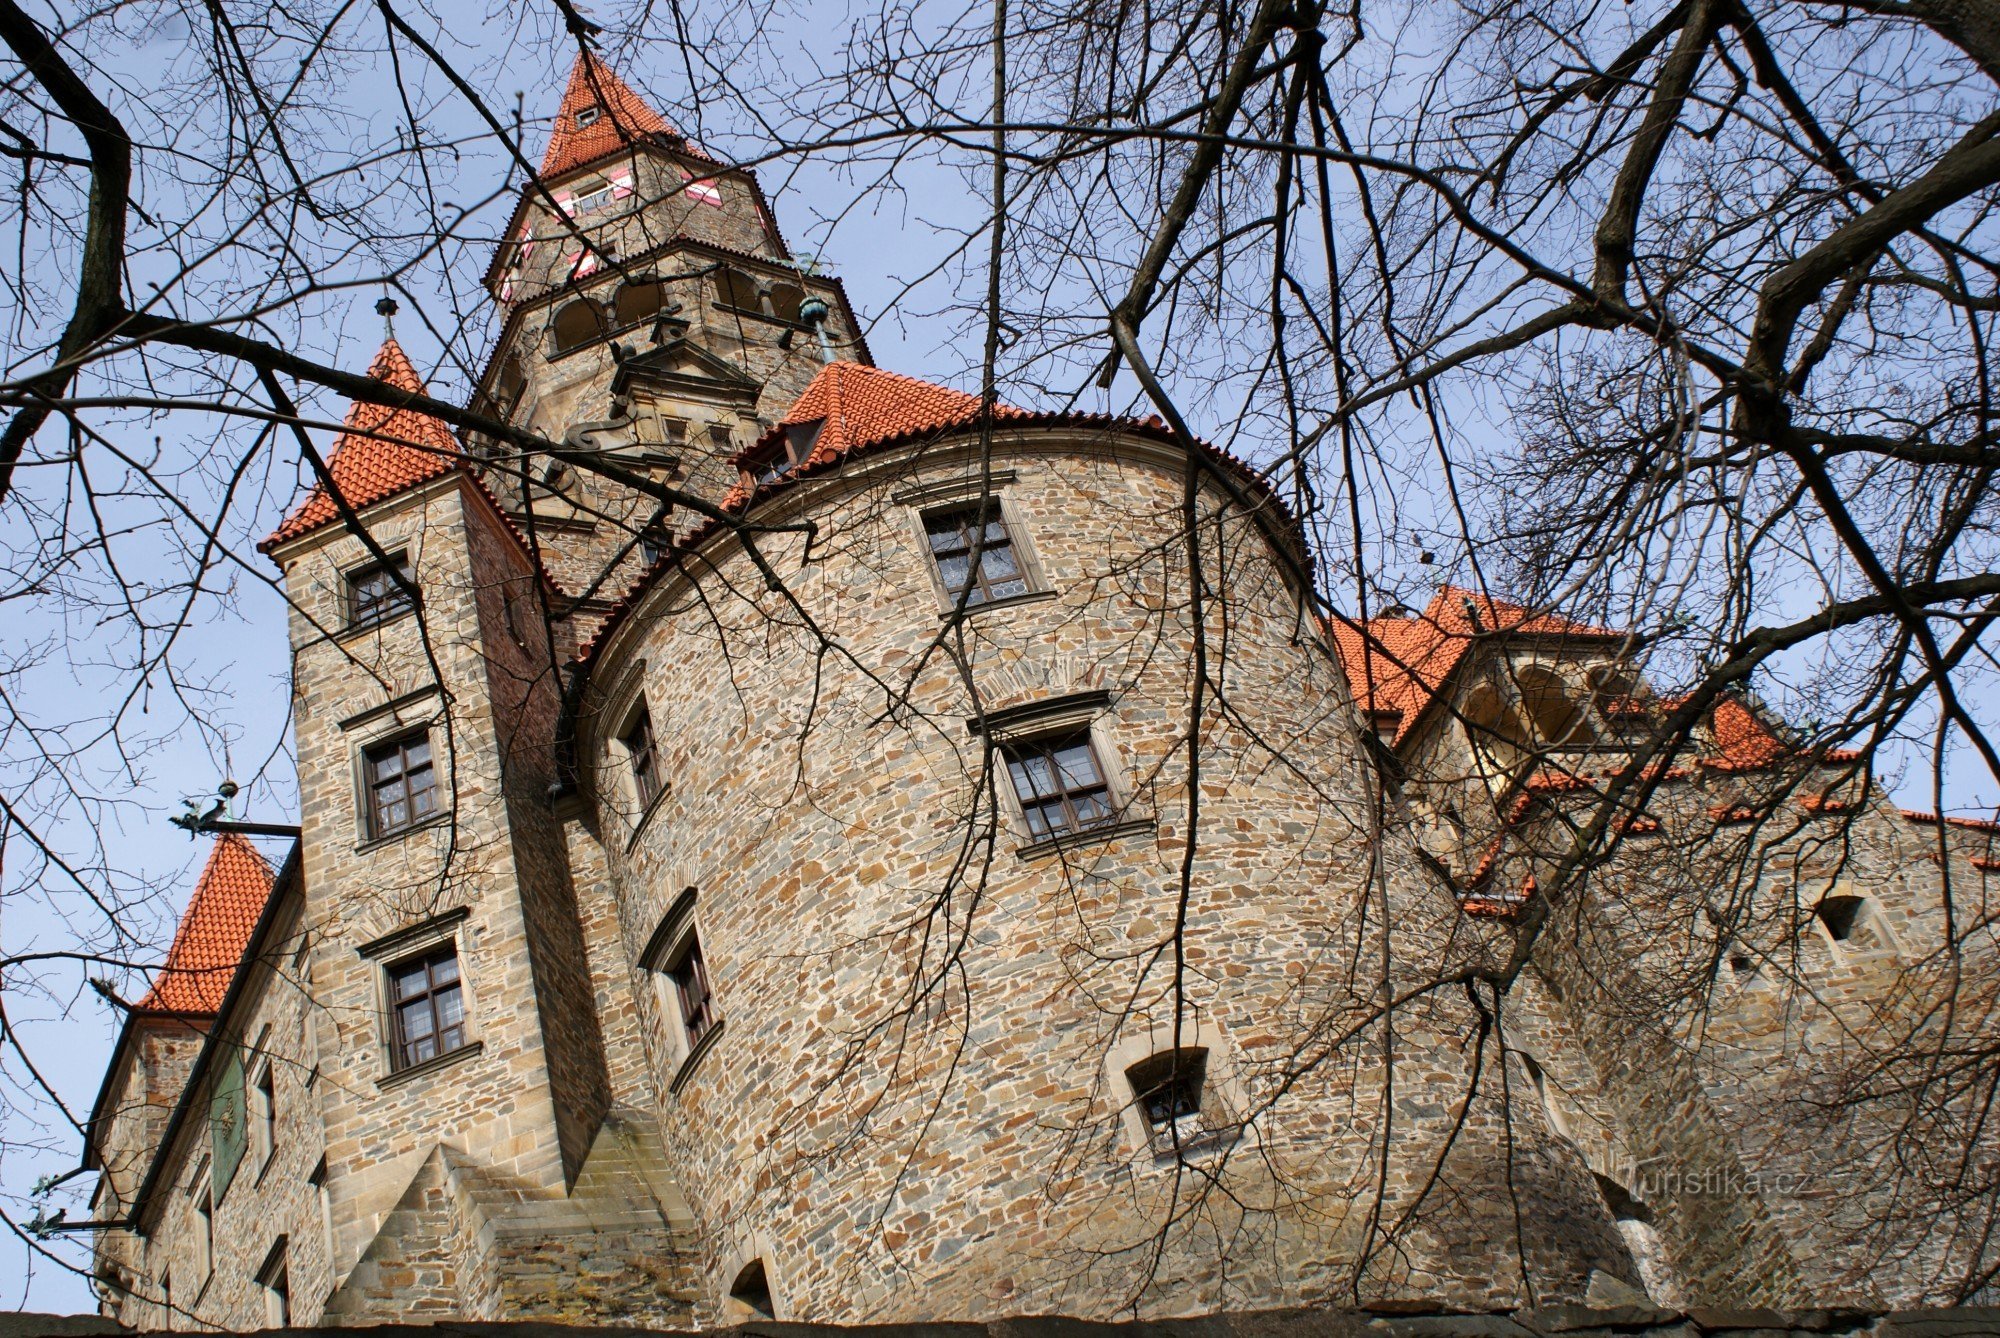 From Bouzov via Cimburk to Radkov or beyond the castles of the Czech-Moravian border